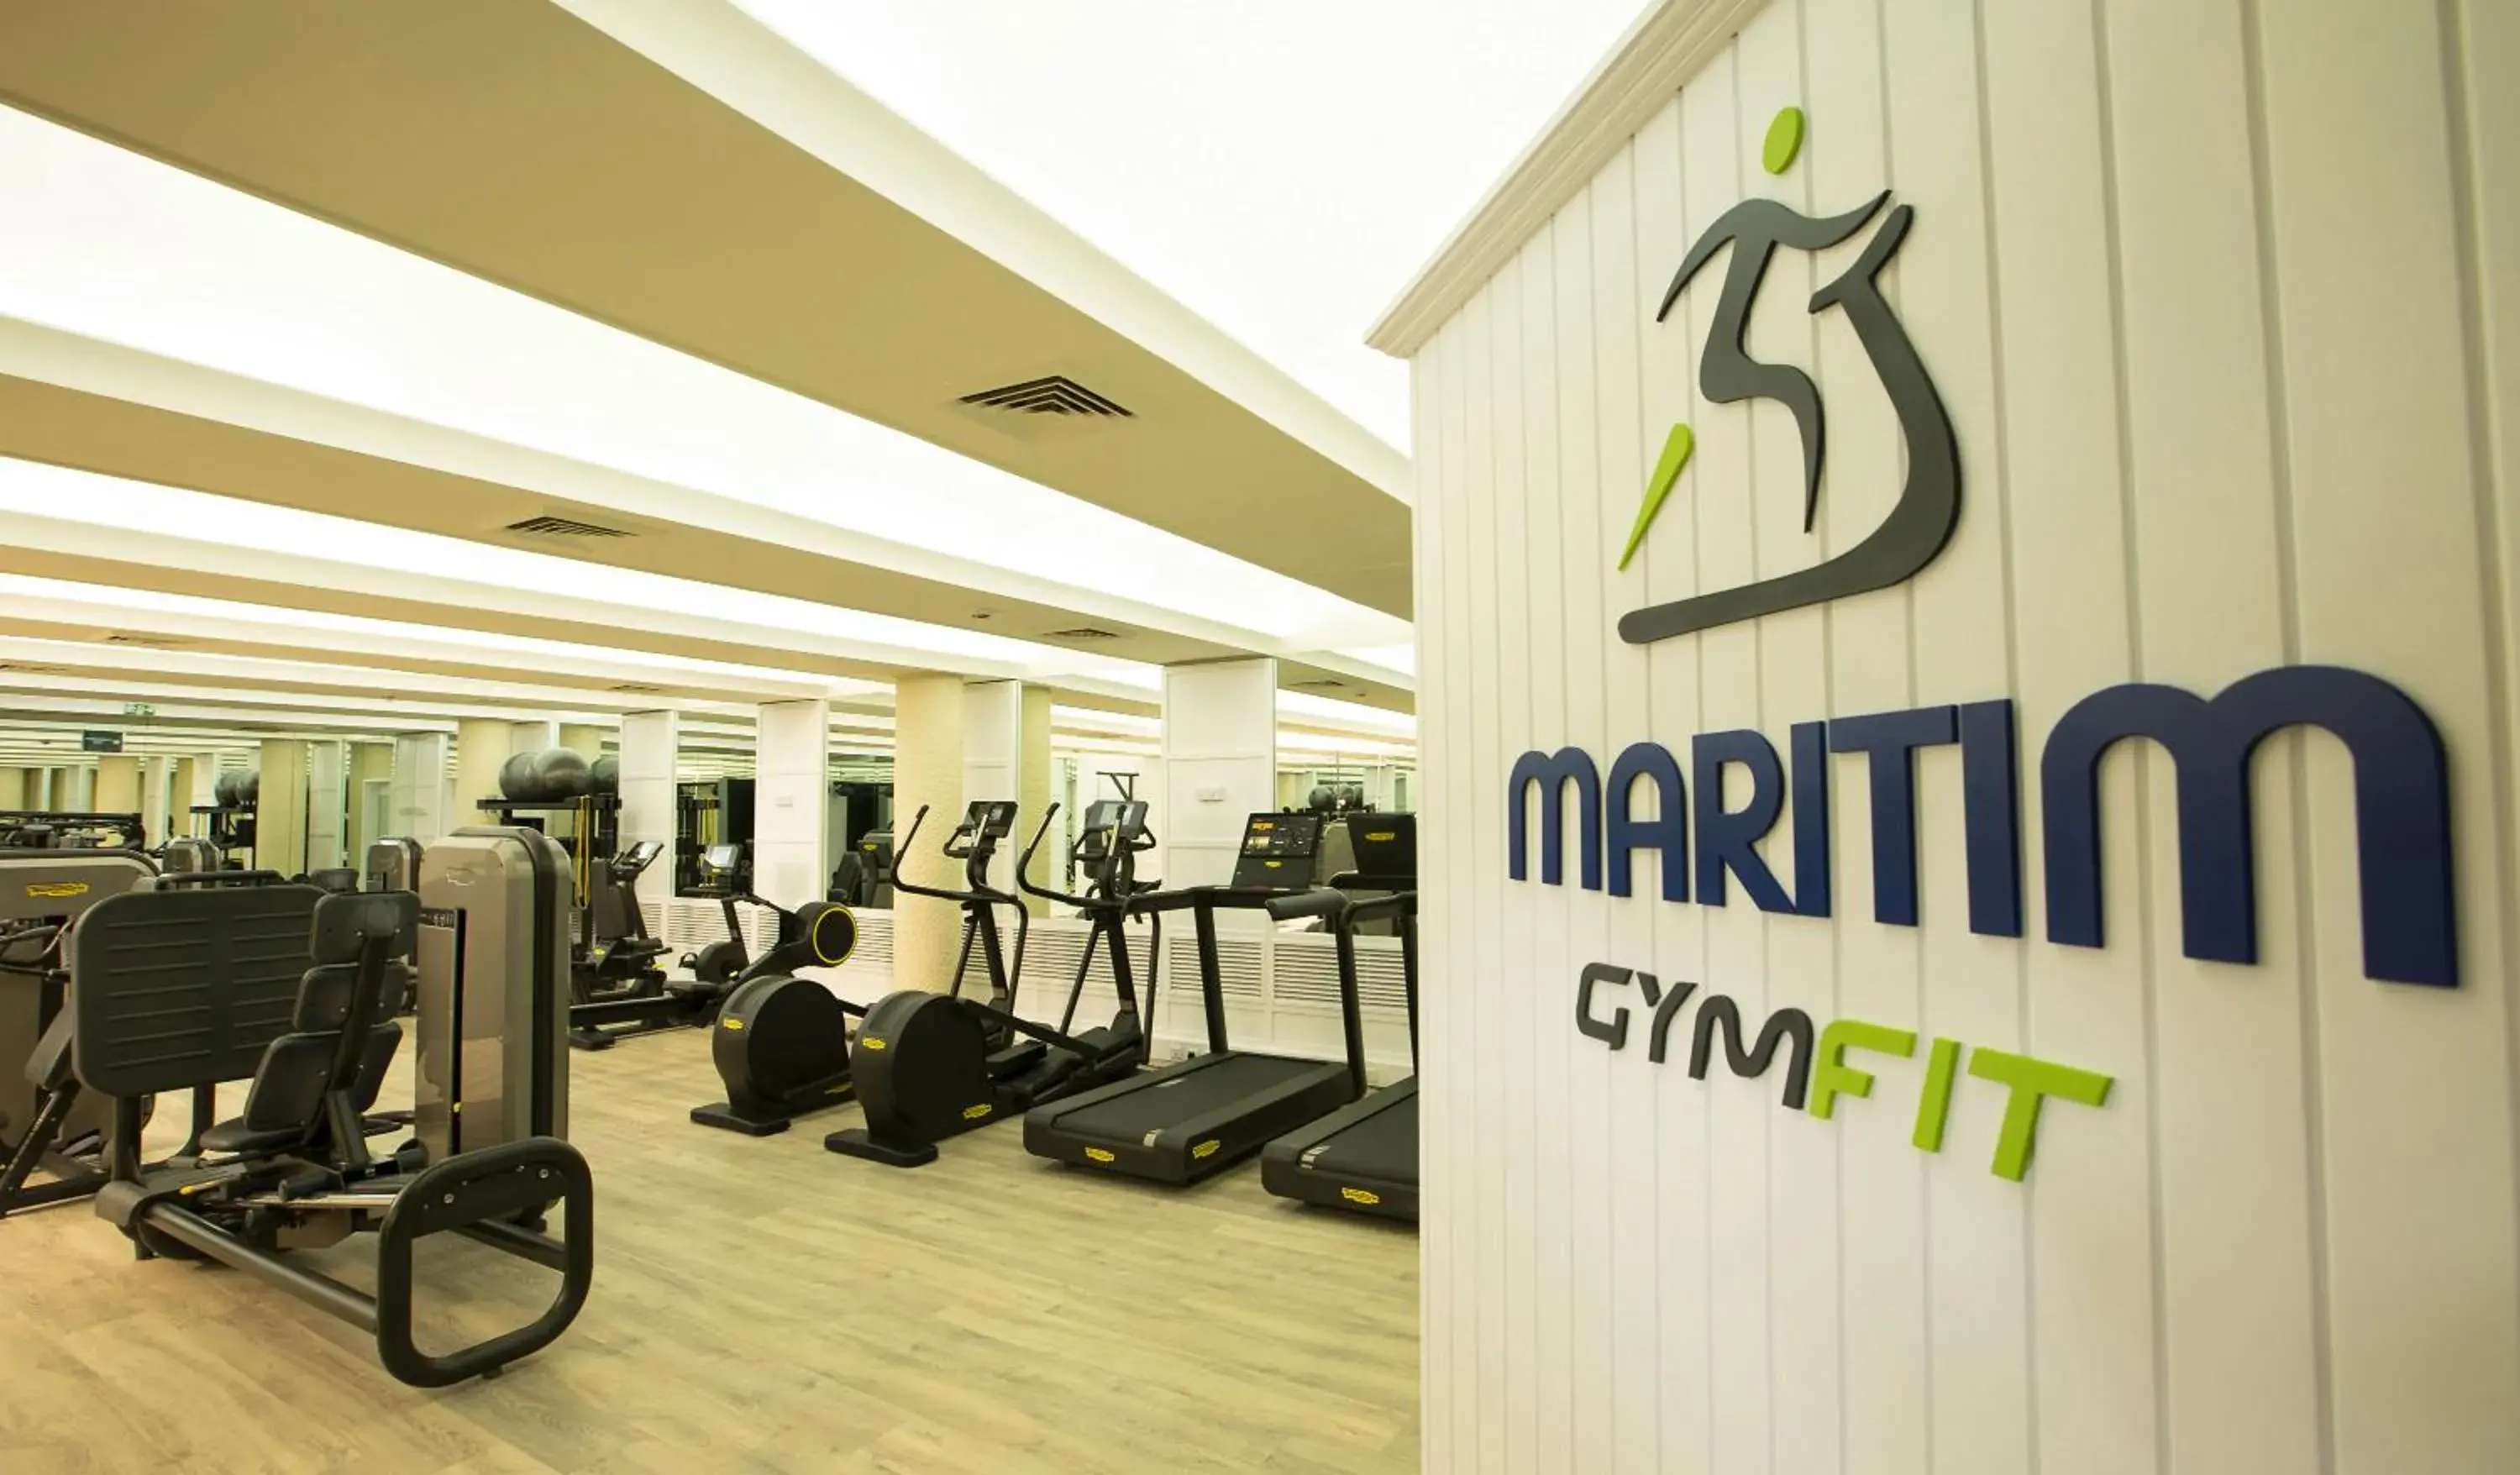 Fitness centre/facilities, Fitness Center/Facilities in Maritim Resort & Spa Mauritius